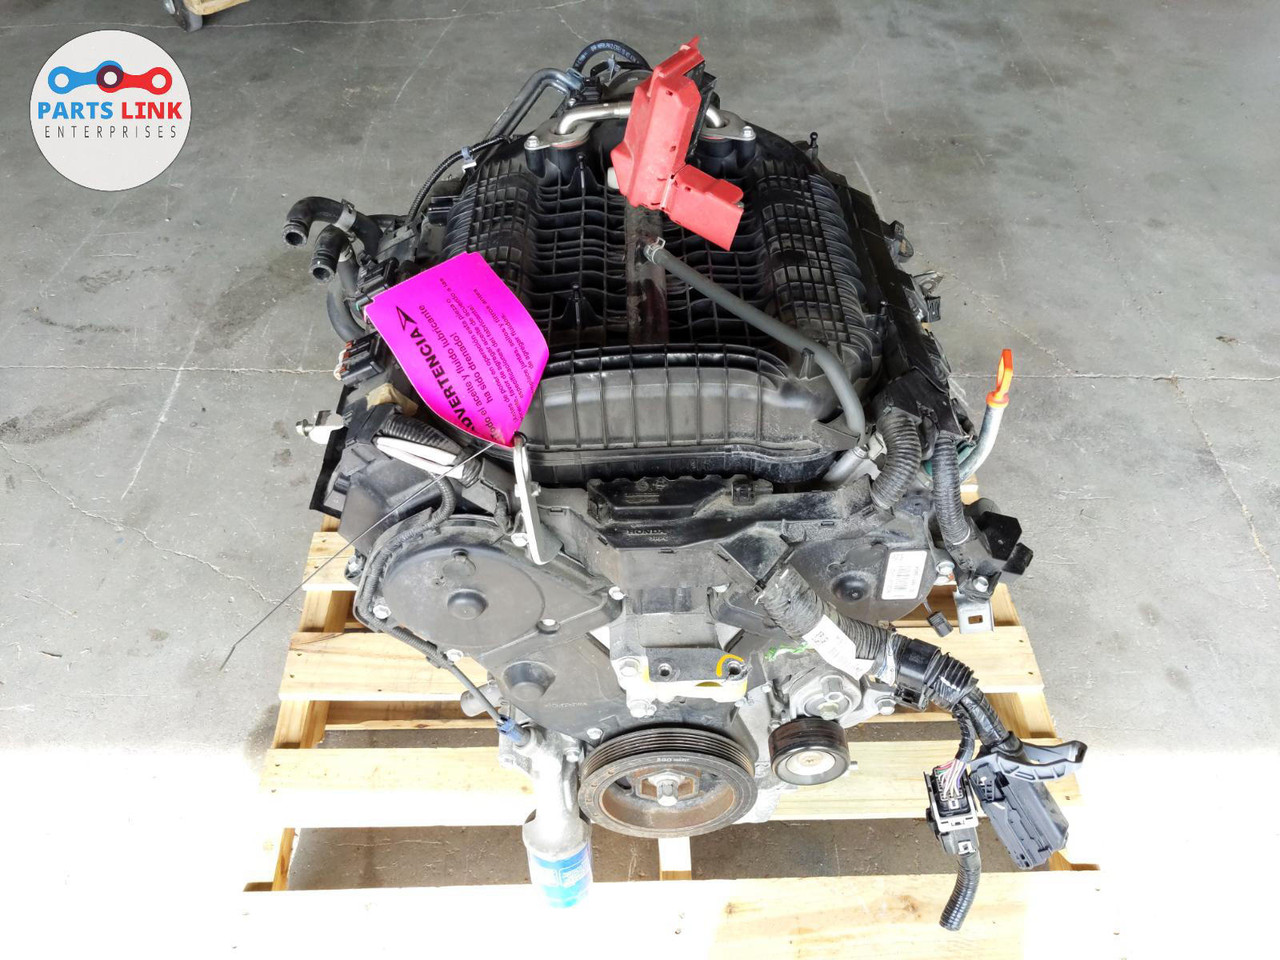 2018-2019 HONDA ODYSSEY 3.5L V6 ENGINE MOTOR LONG BLOCK J35Y7 9 SPEED 22K  ASSY  Wiring Diagram 203 30 Honda Odyssey    Parts Link Enterprise